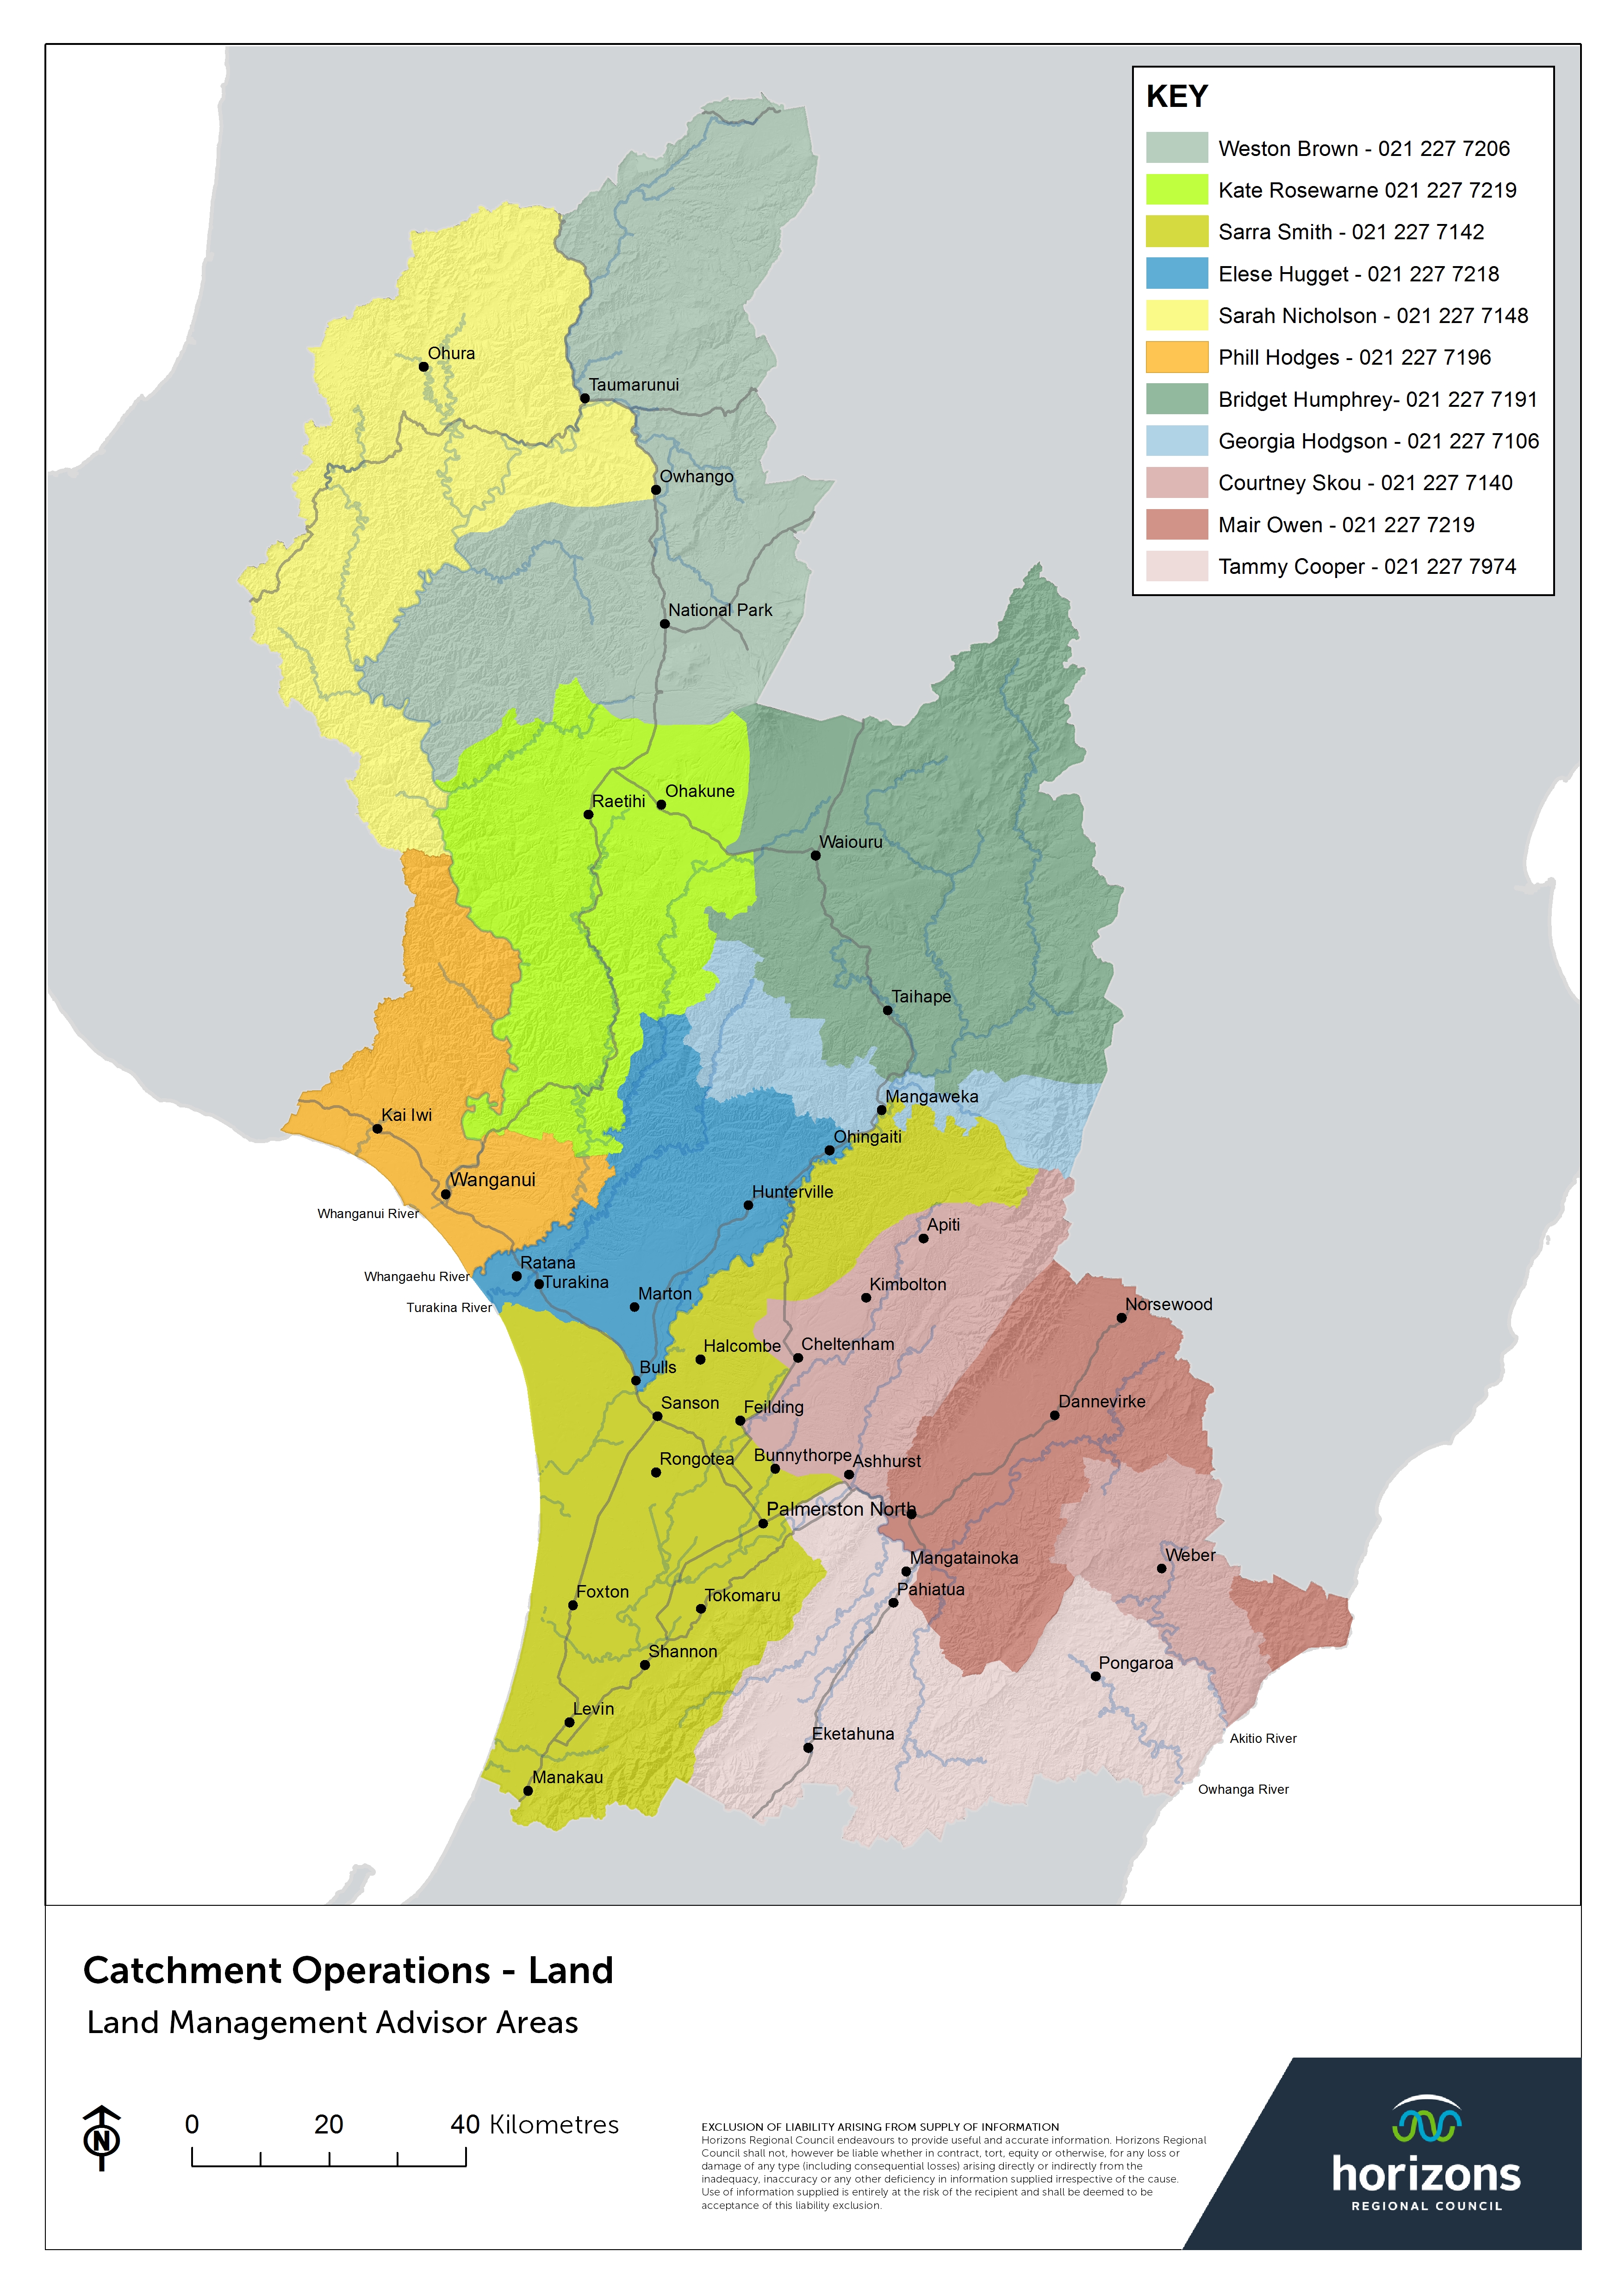 Map of Land Management Advisor Areas